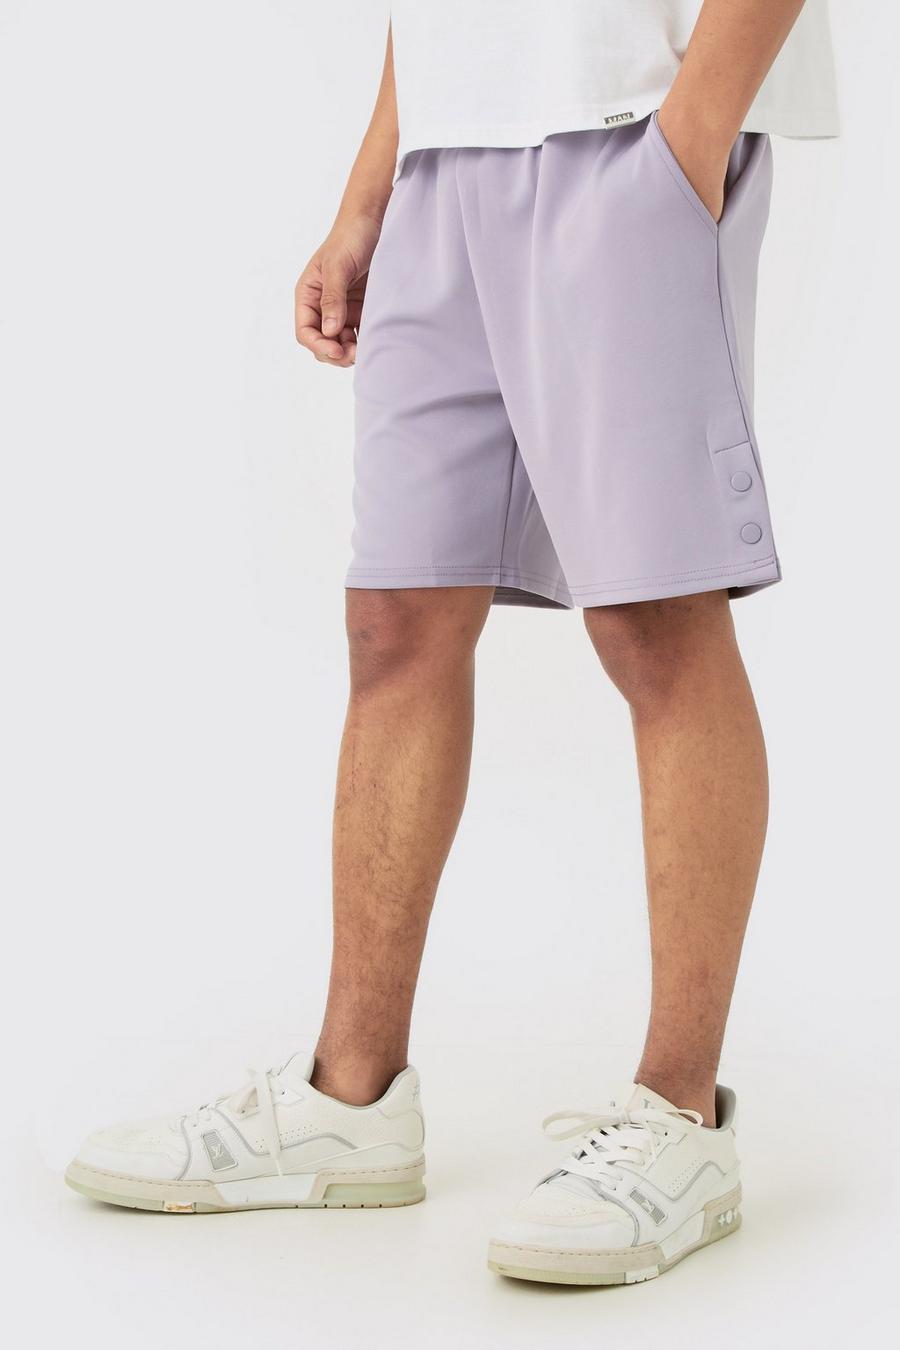 Lockere Scuba Shorts mit Druckknöpfen, Lilac